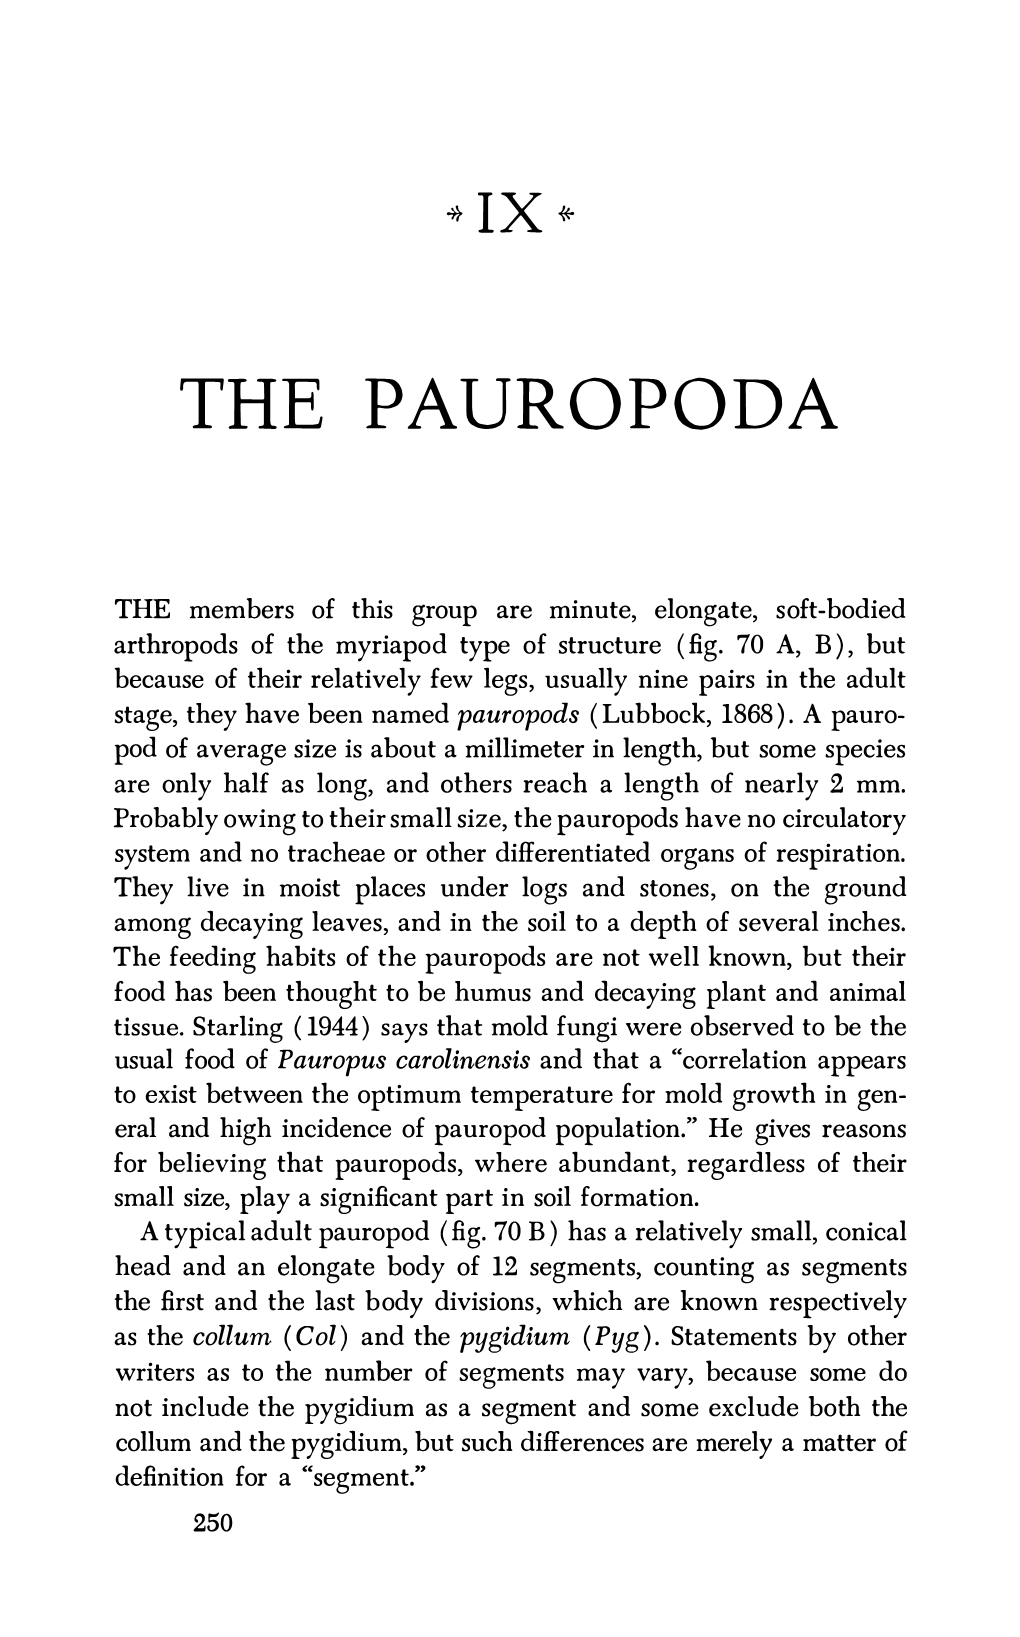 The Pauropoda